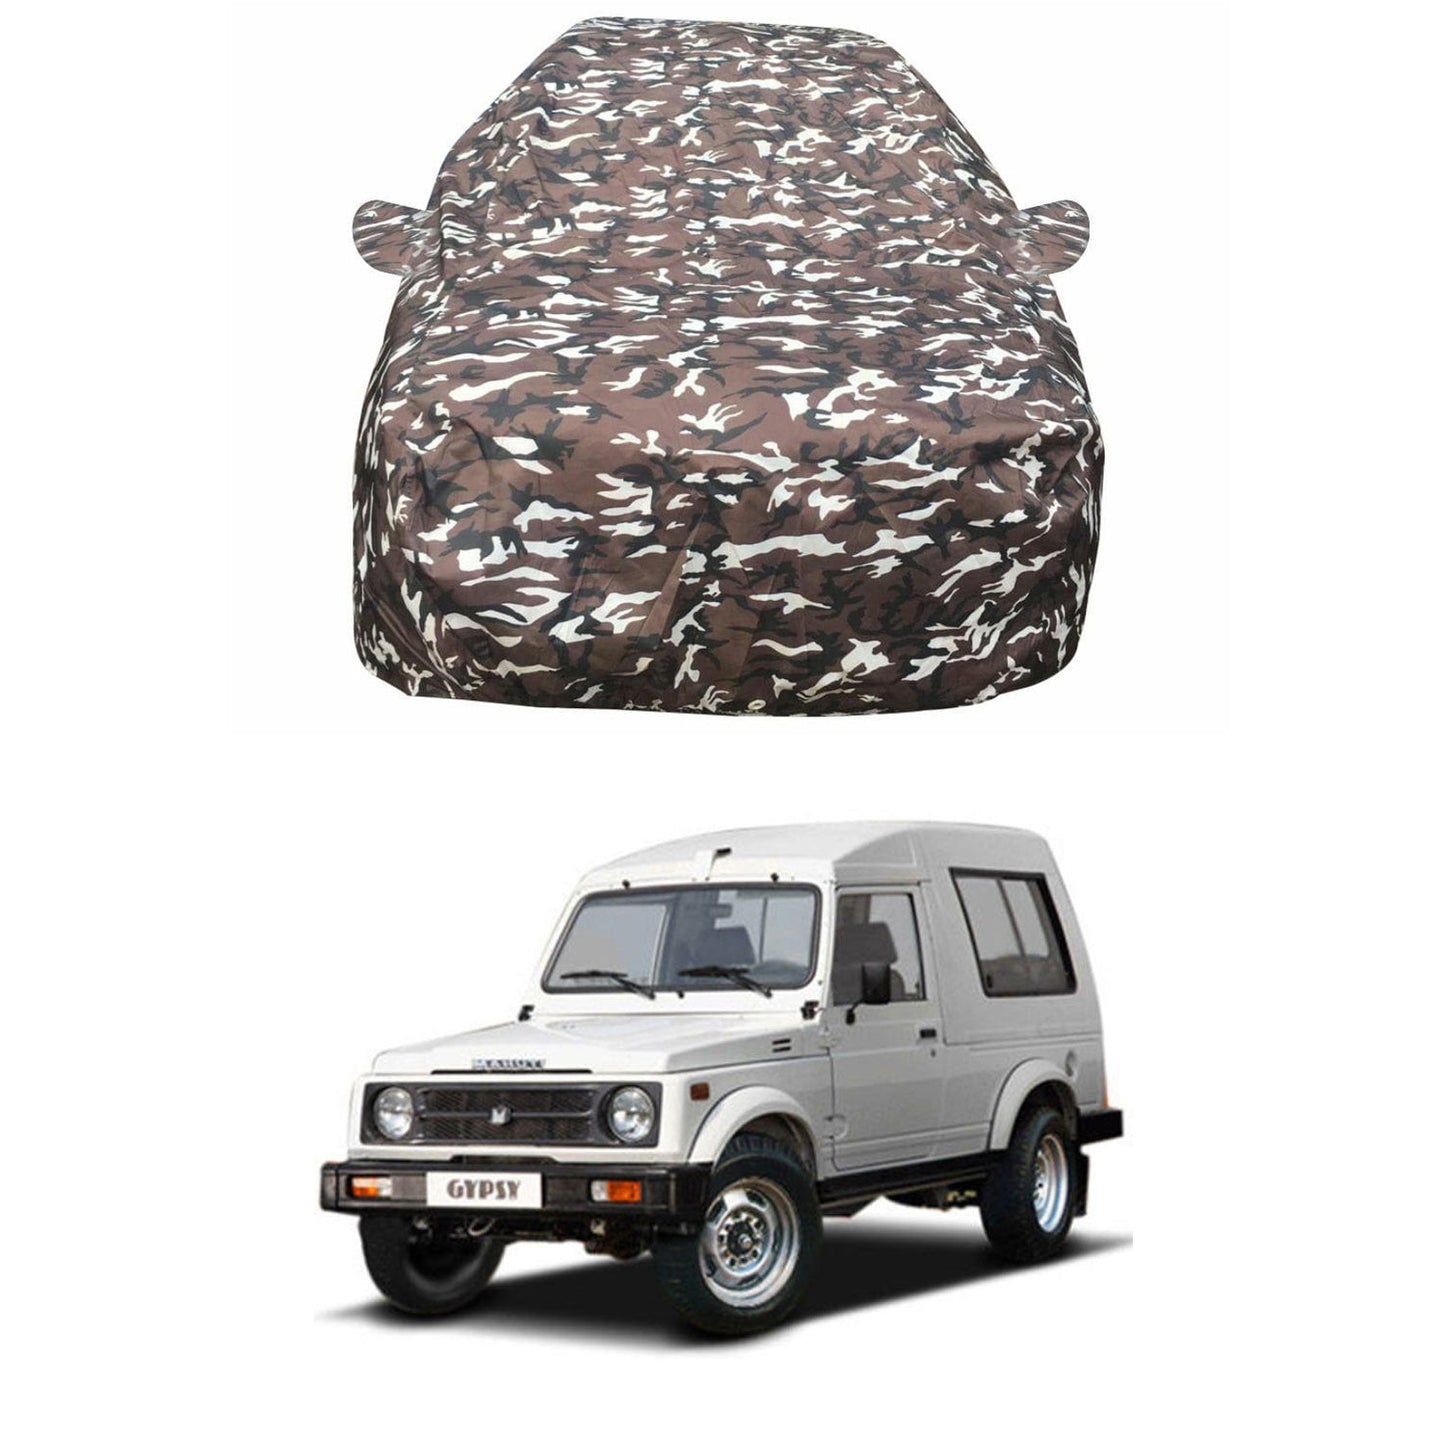 Oshotto Ranger Design Made of 100% Waterproof Fabric Car Body Cover with Mirror Pocket For Maruti Suzuki Gypsy